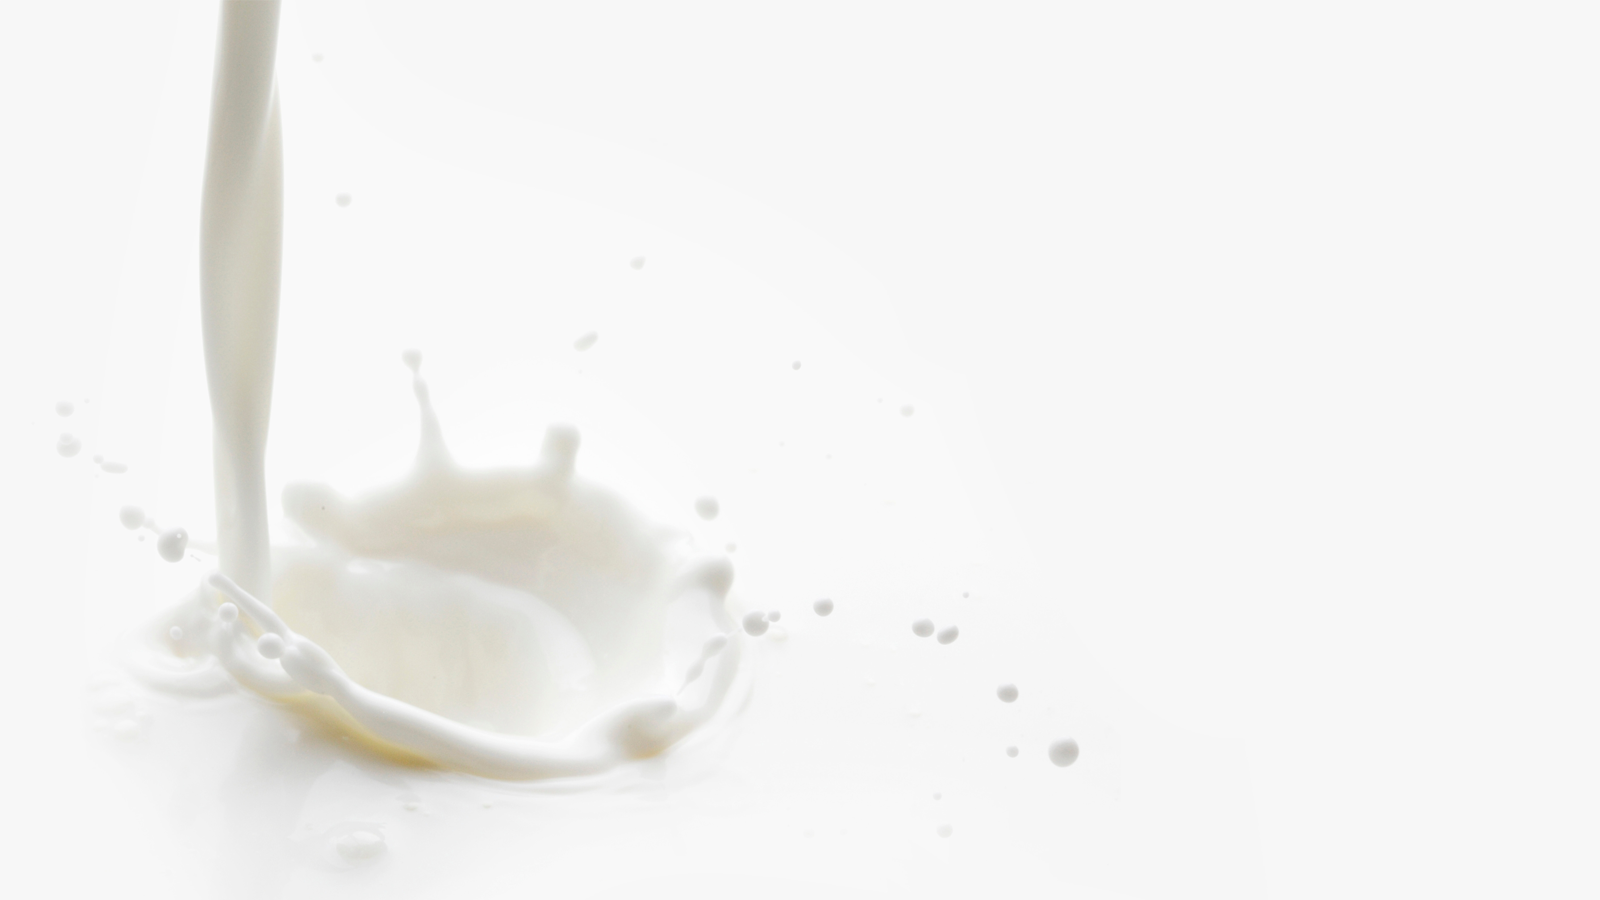 Pouring milk splash isolated on white background macro